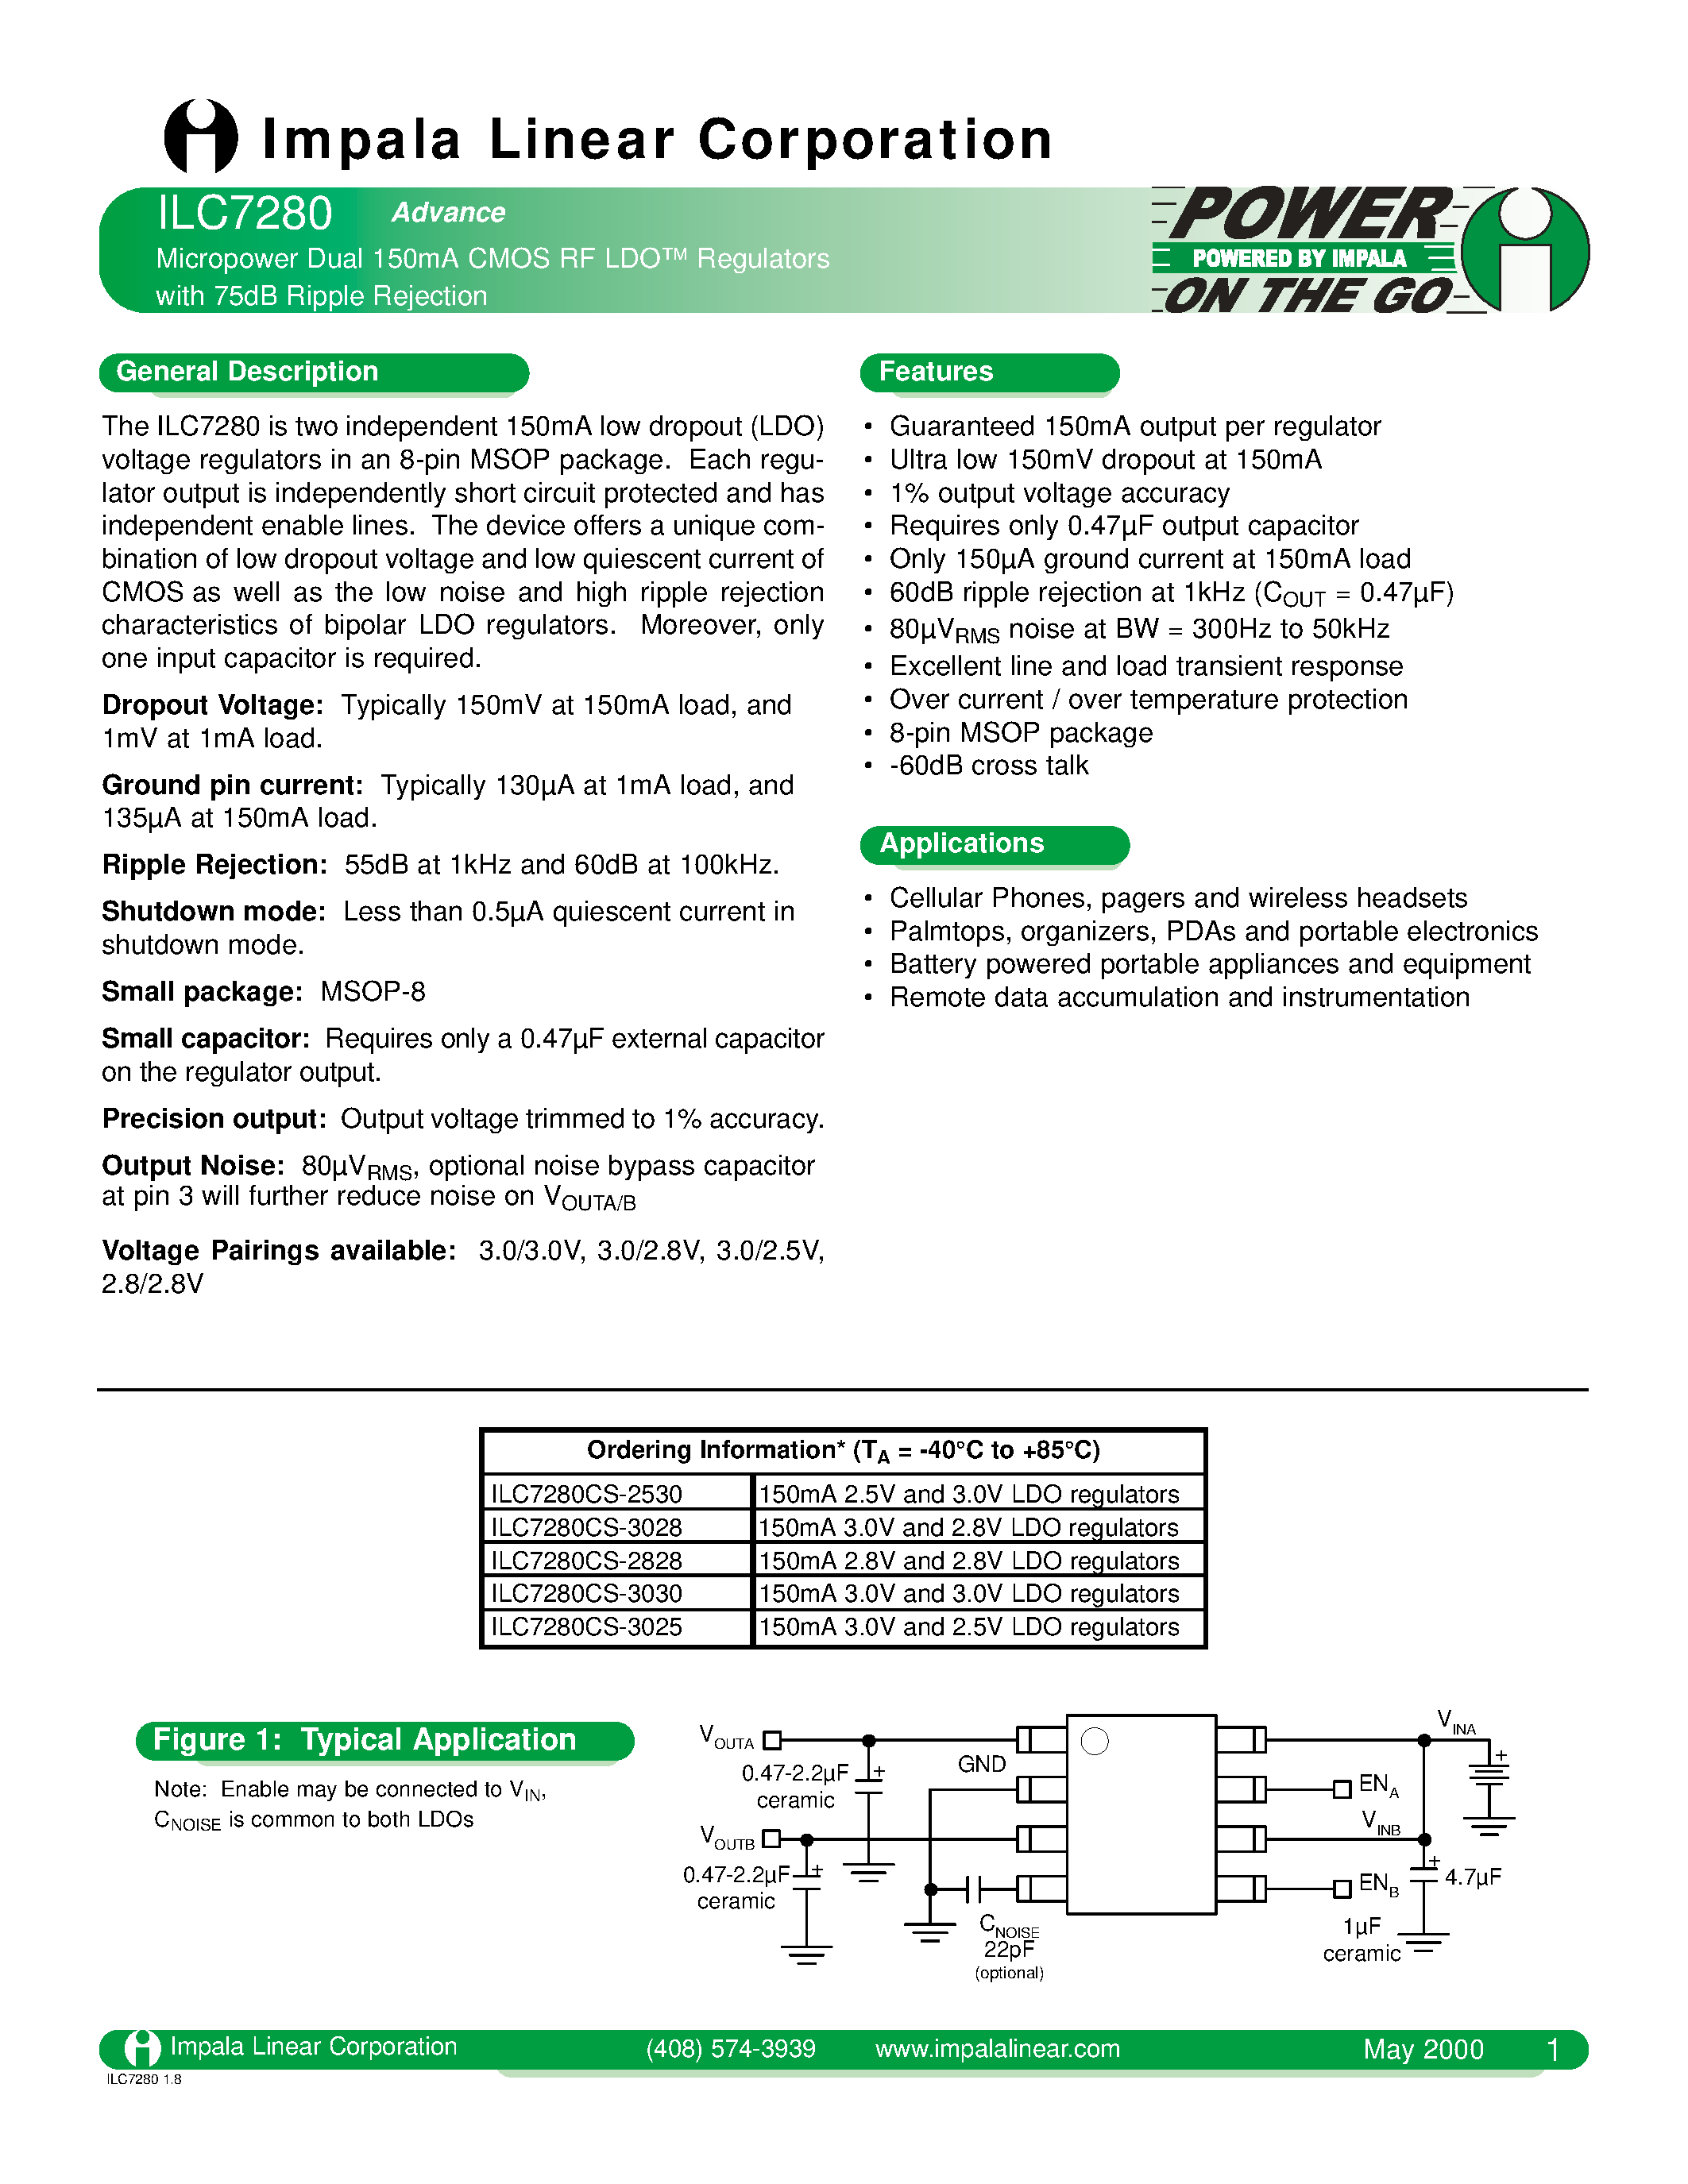 Даташит ILC7280CS-3028 - MICROPOWER DUAL 150MA CMOS RF LDO REGULATORS WITH 75DB RIPPLE REJECTION страница 1